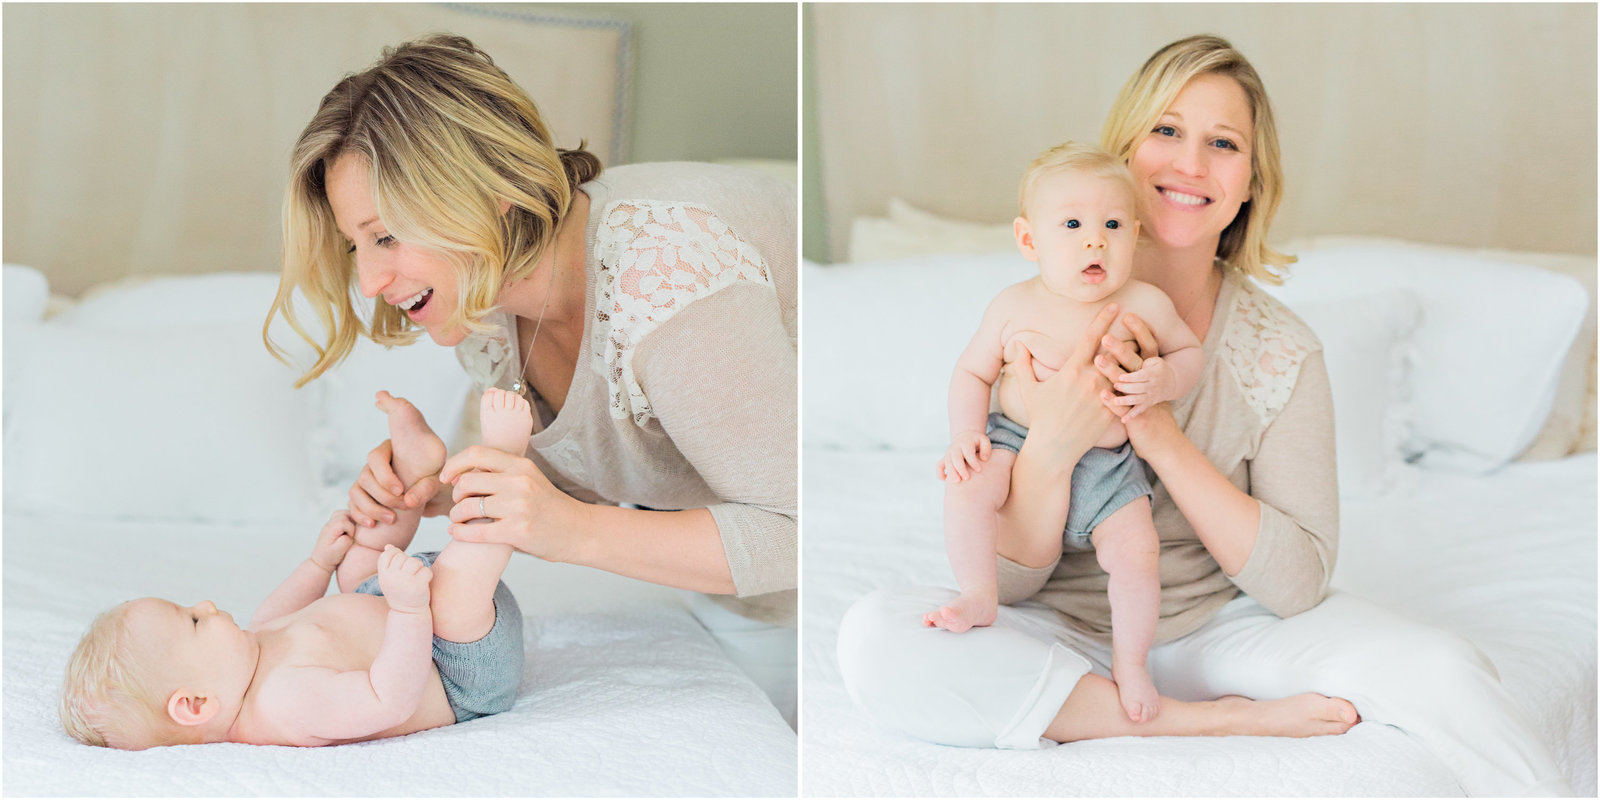 Kelly Morgan - Baby & Child Photographer - Westport CT - 5